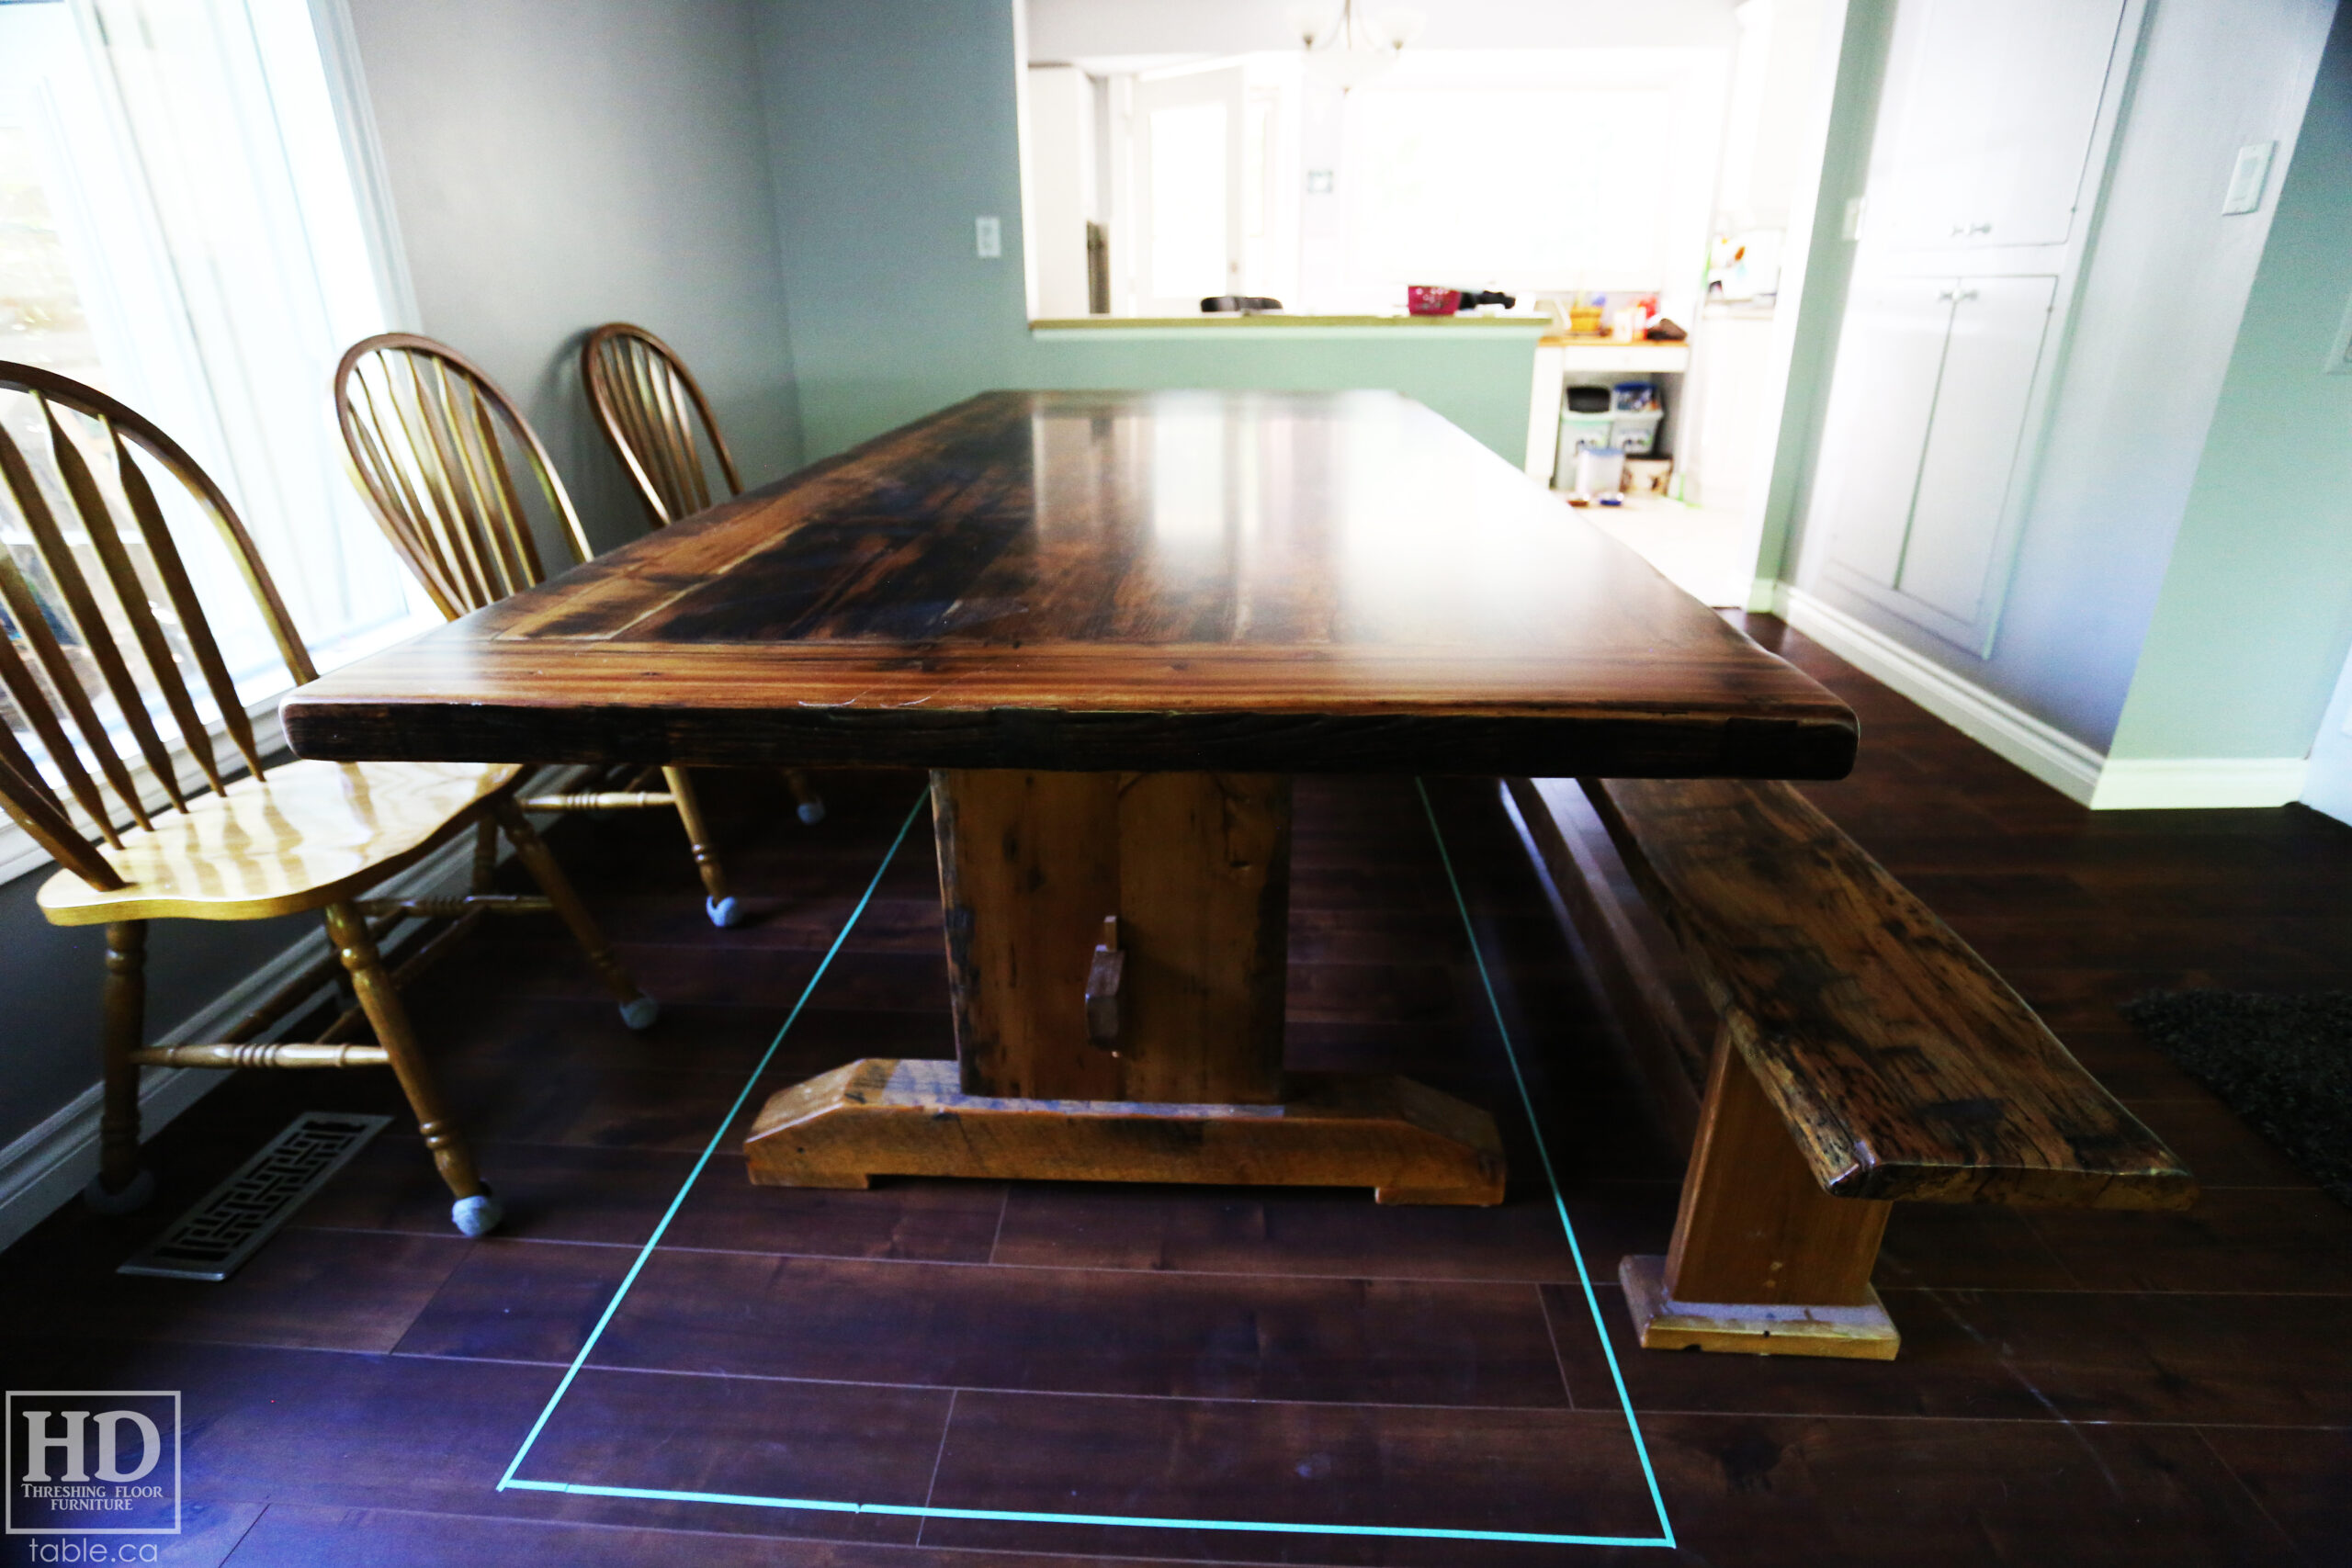 Rustic Wood Table by HD Threshing Floor Furniture / www.table.ca